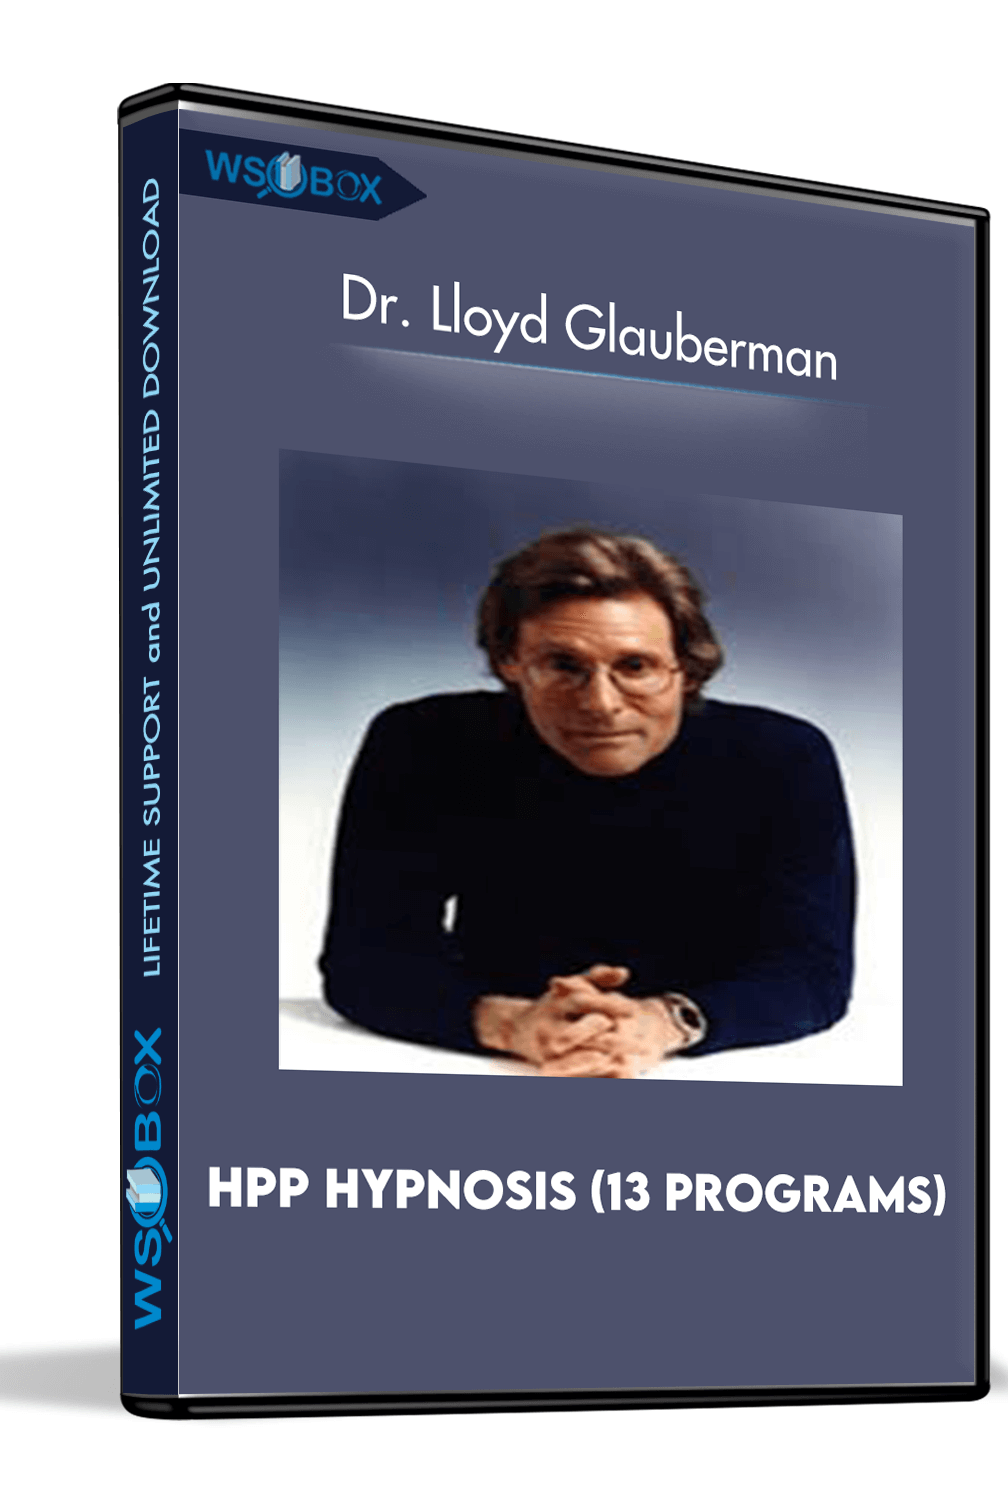 HPP Hypnosis (13 Programs) – Dr. Lloyd Glauberman